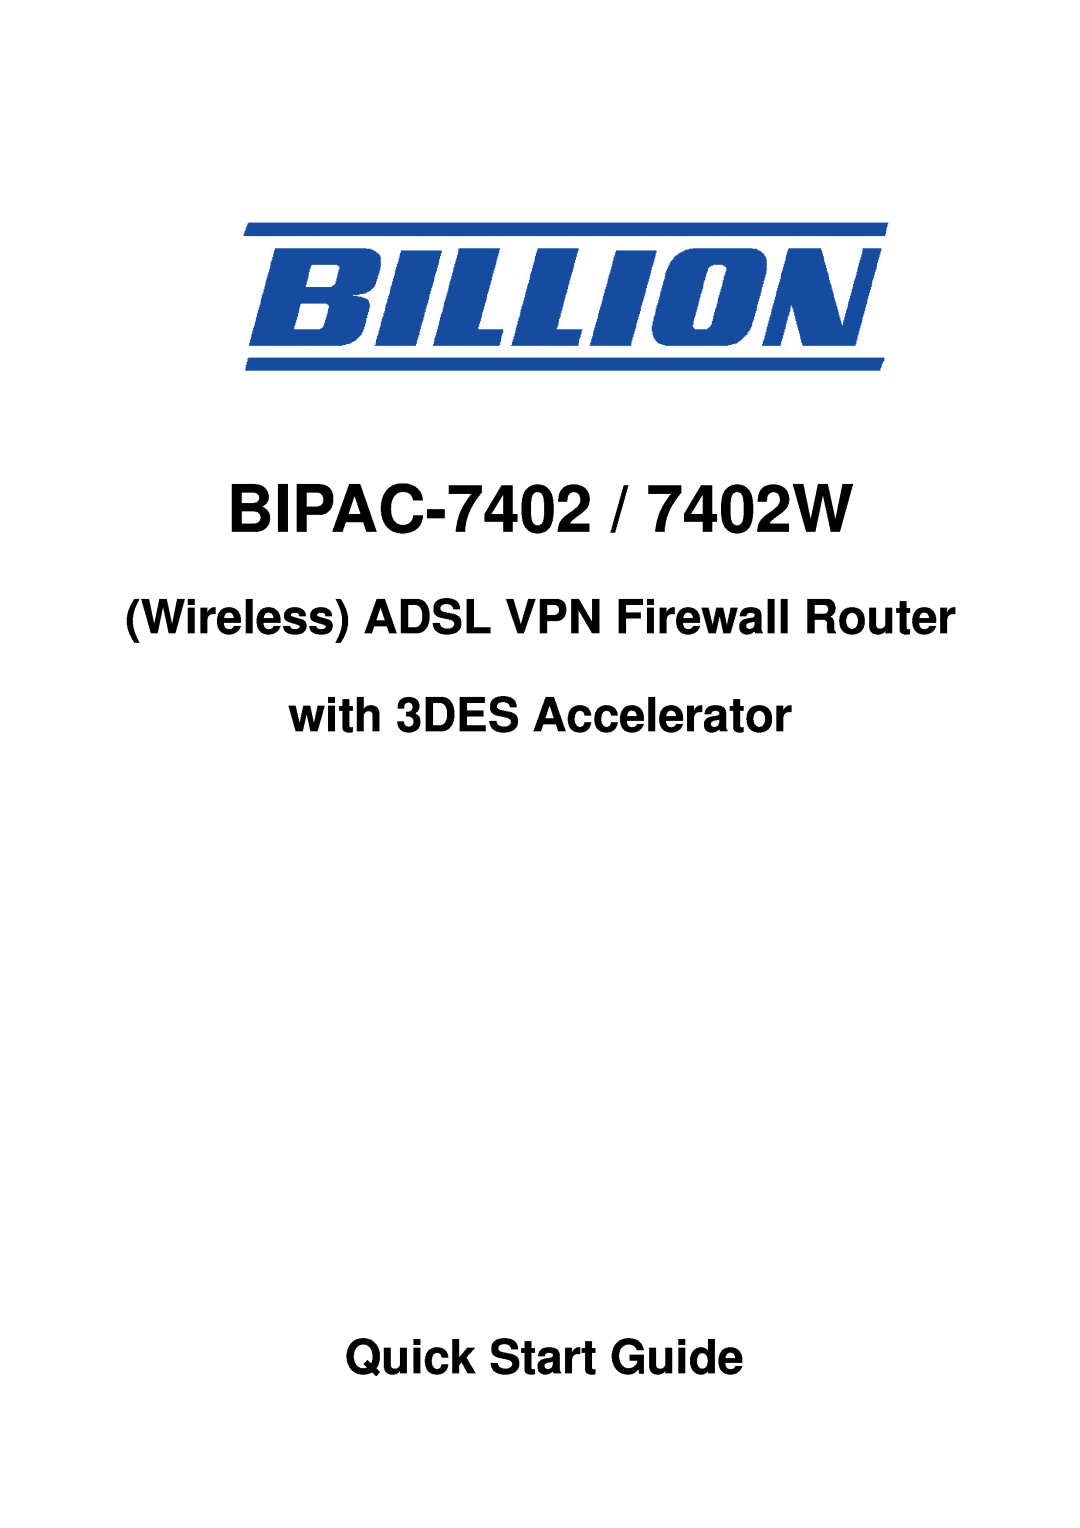 Billion Electric Company BiPAC 7402W quick start BIPAC-7402 / 7402W, Quick Start Guide 